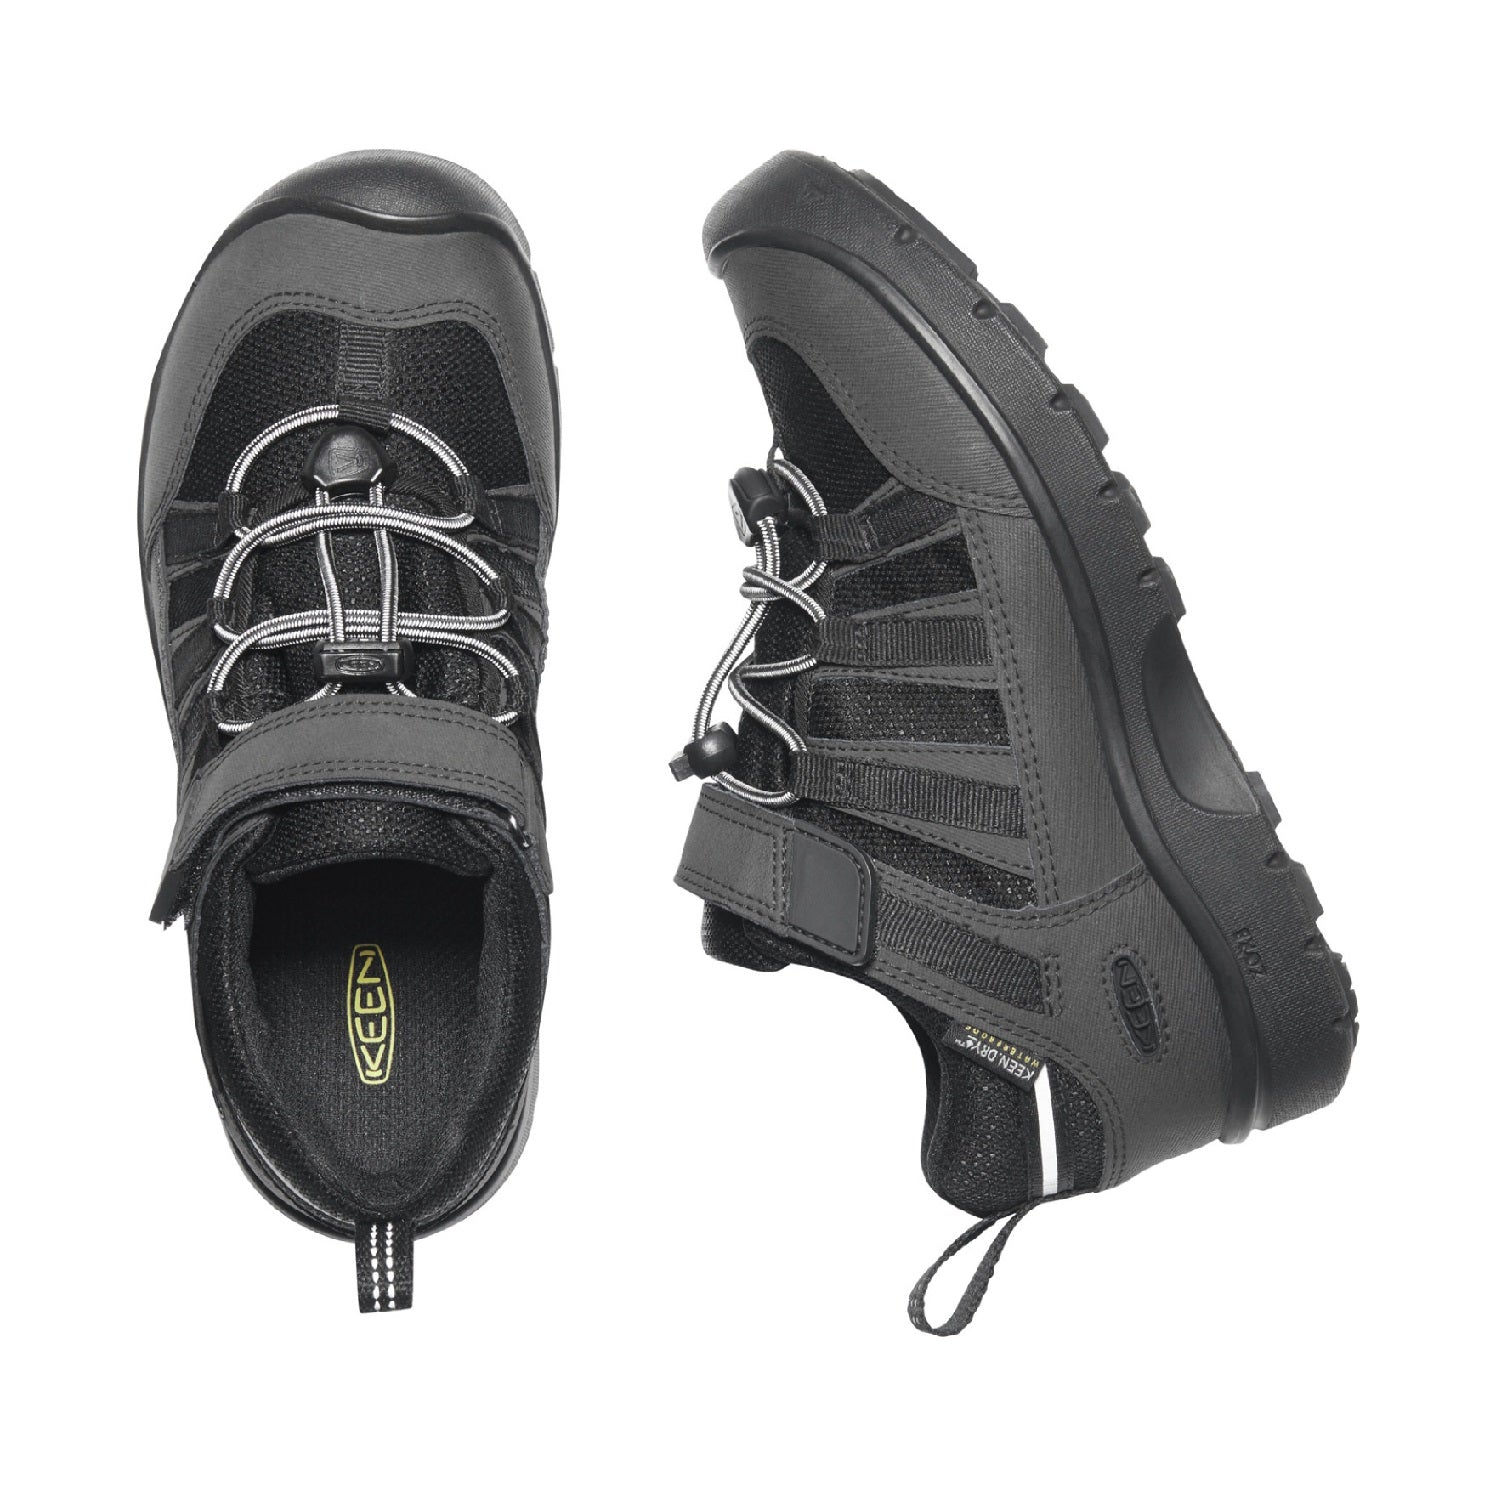 Kids' Hikeport II Waterproof Shoe -  Style #1023283